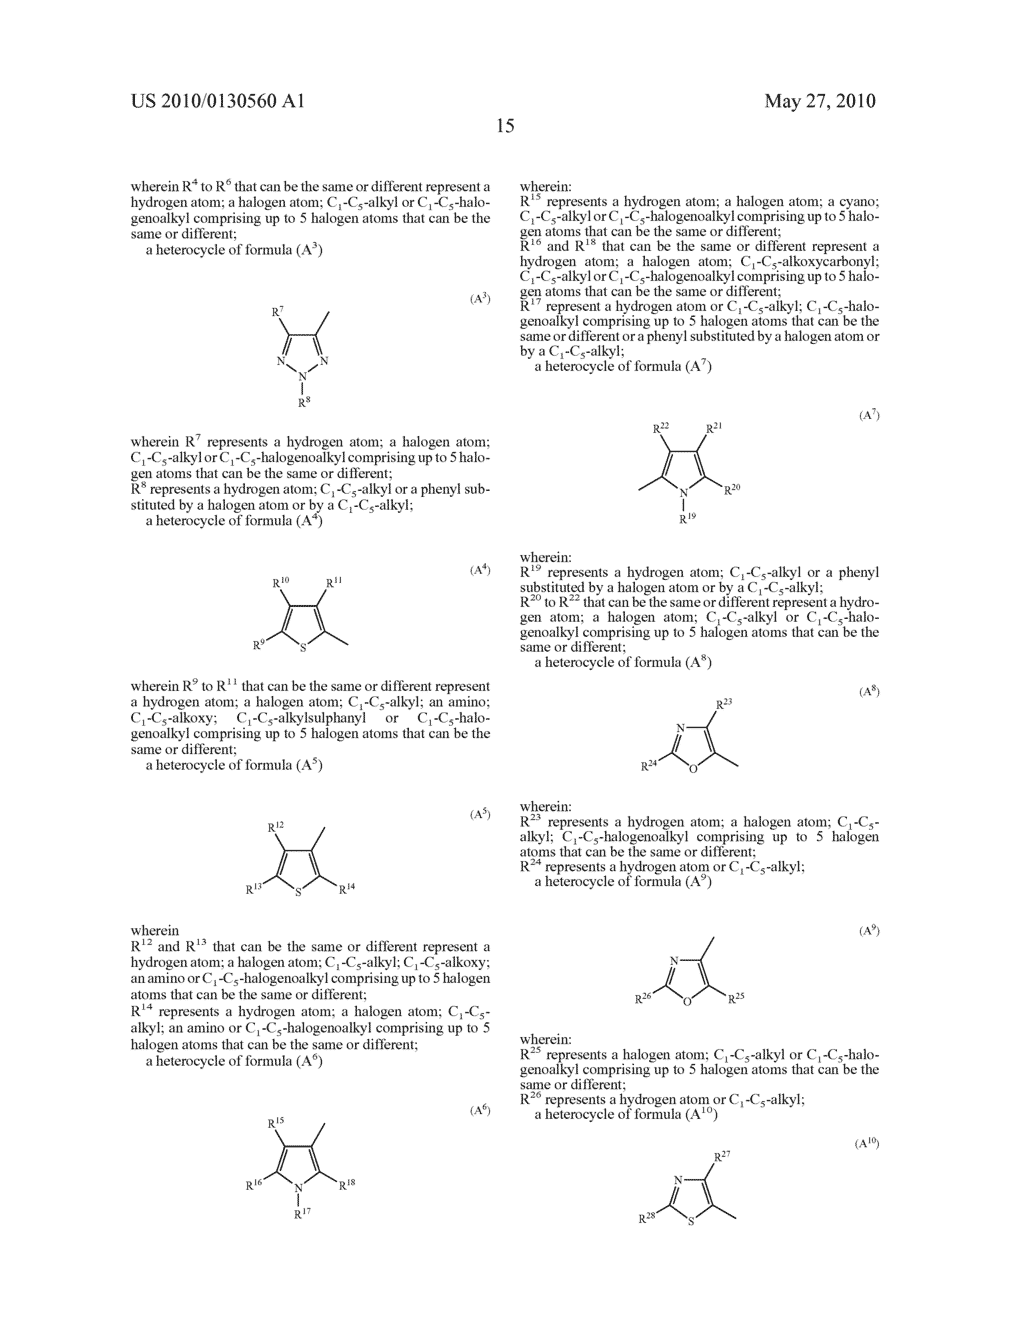 FUNGICIDE 2-PYRIDYL-METHYLENE-THIO CARBOXAMIDE OR 2-PYRIDYL-METHYLENE-N-SUBSTITUTED CARBOXIMIDAMIDE DERIVATIVES - diagram, schematic, and image 16